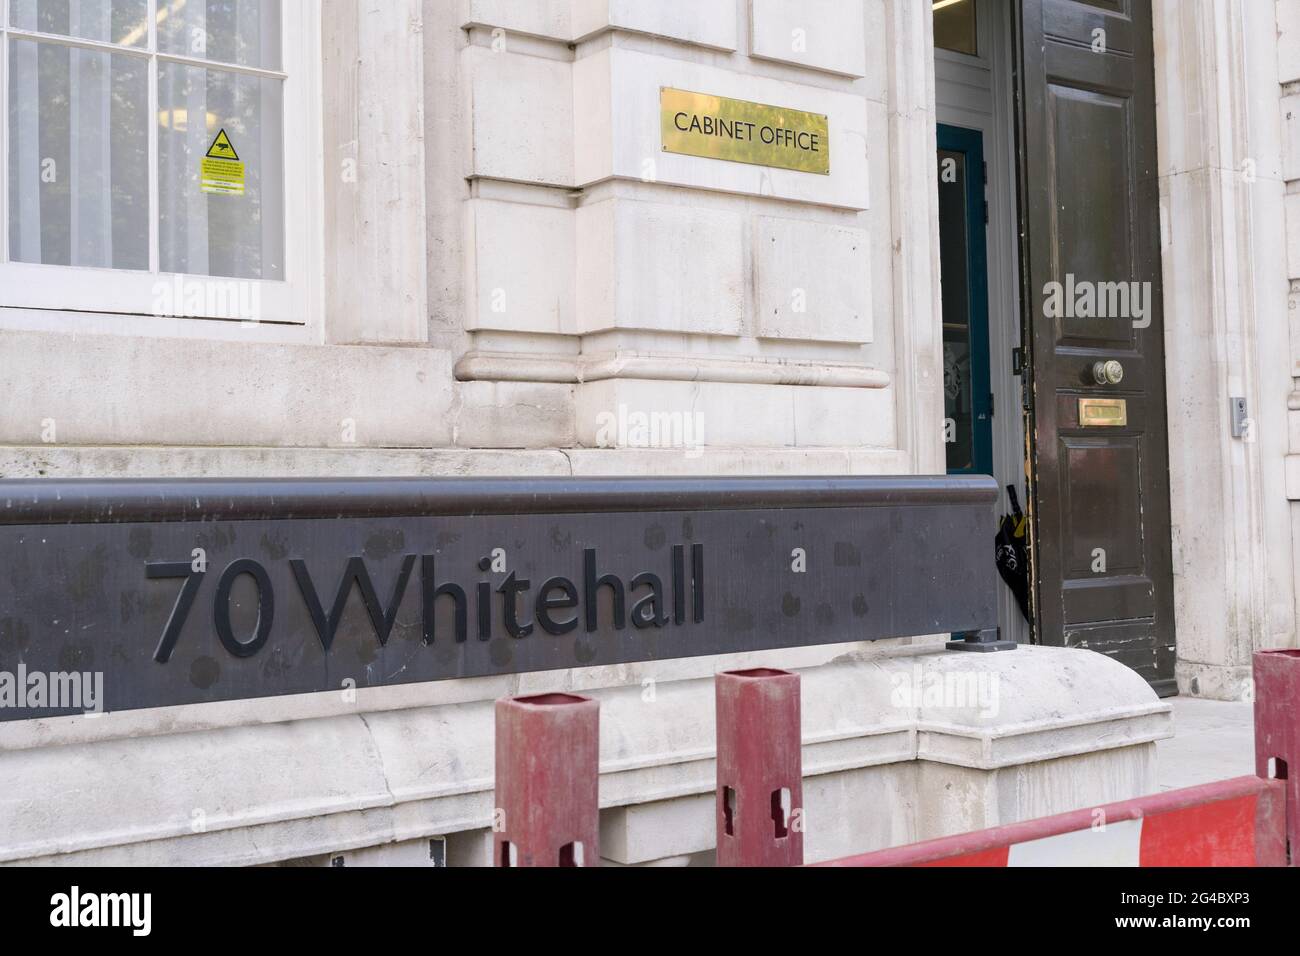 Eingang zum Kabinett, 70 Whitehall, Westminster City London, England, Großbritannien Stockfoto